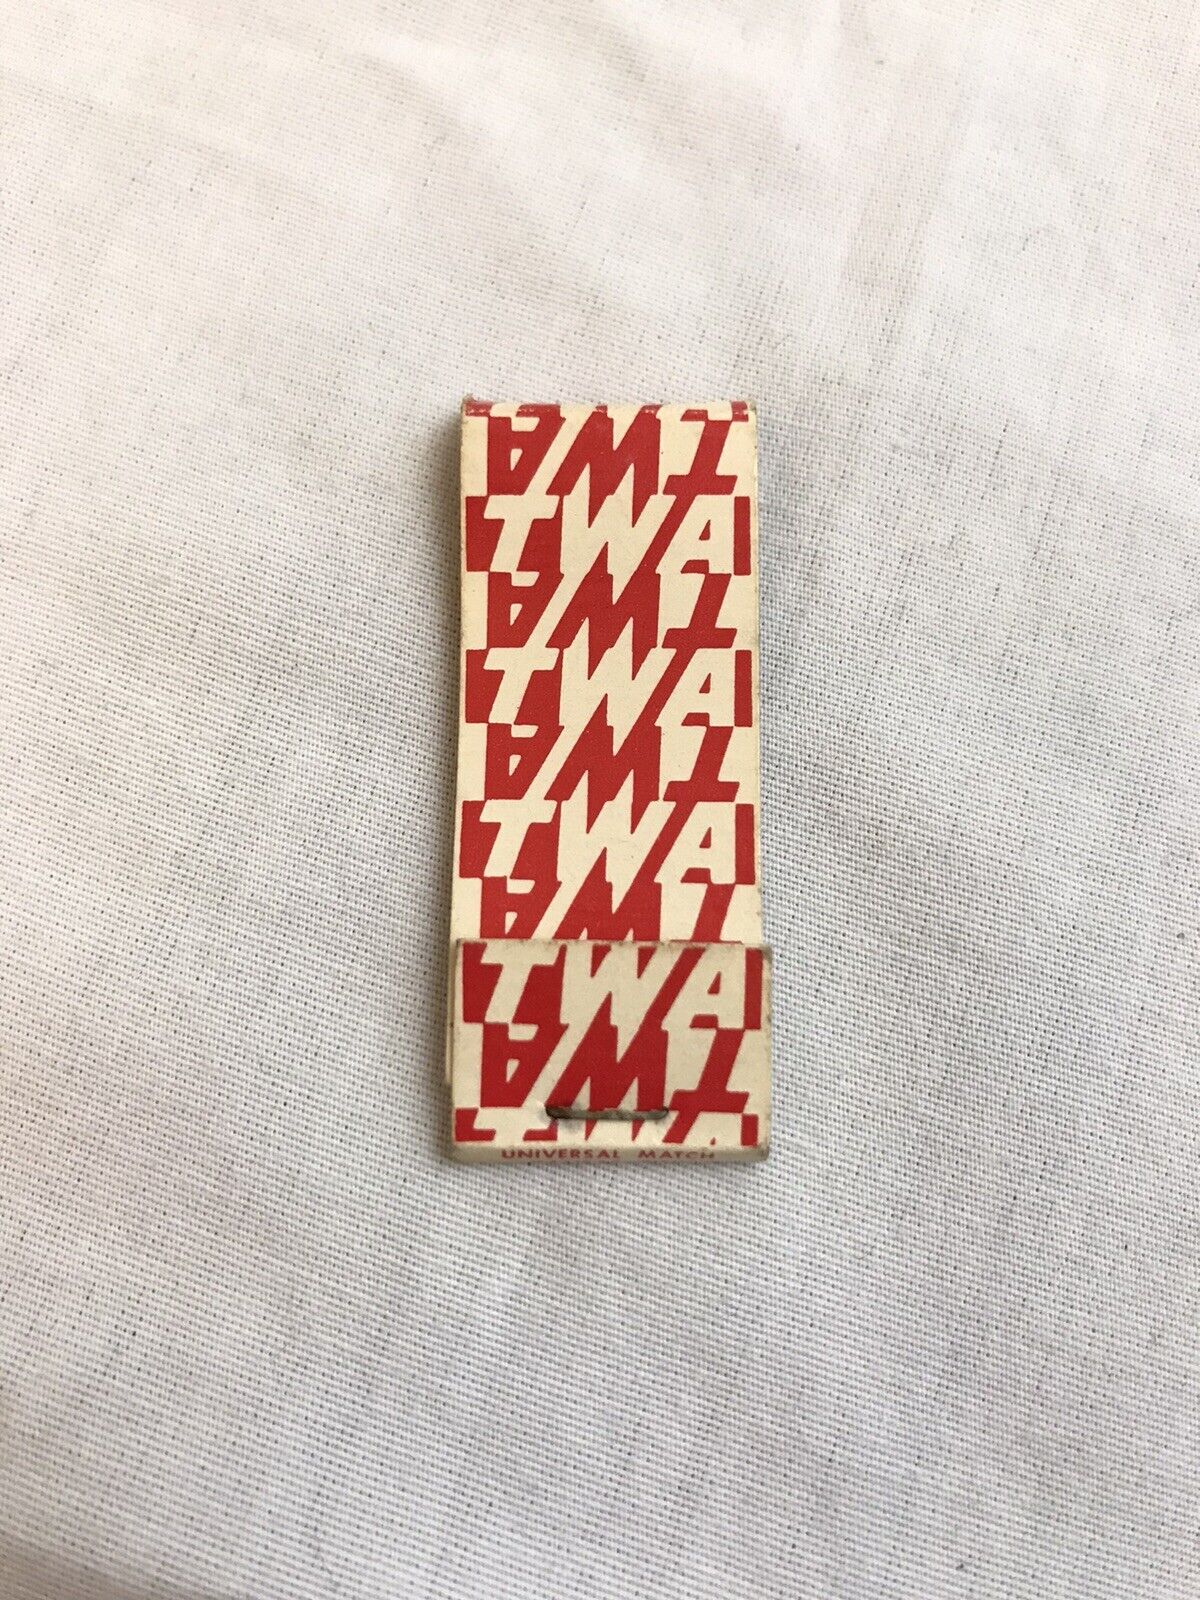 TWA Mini Matchbook Vintage Advertising